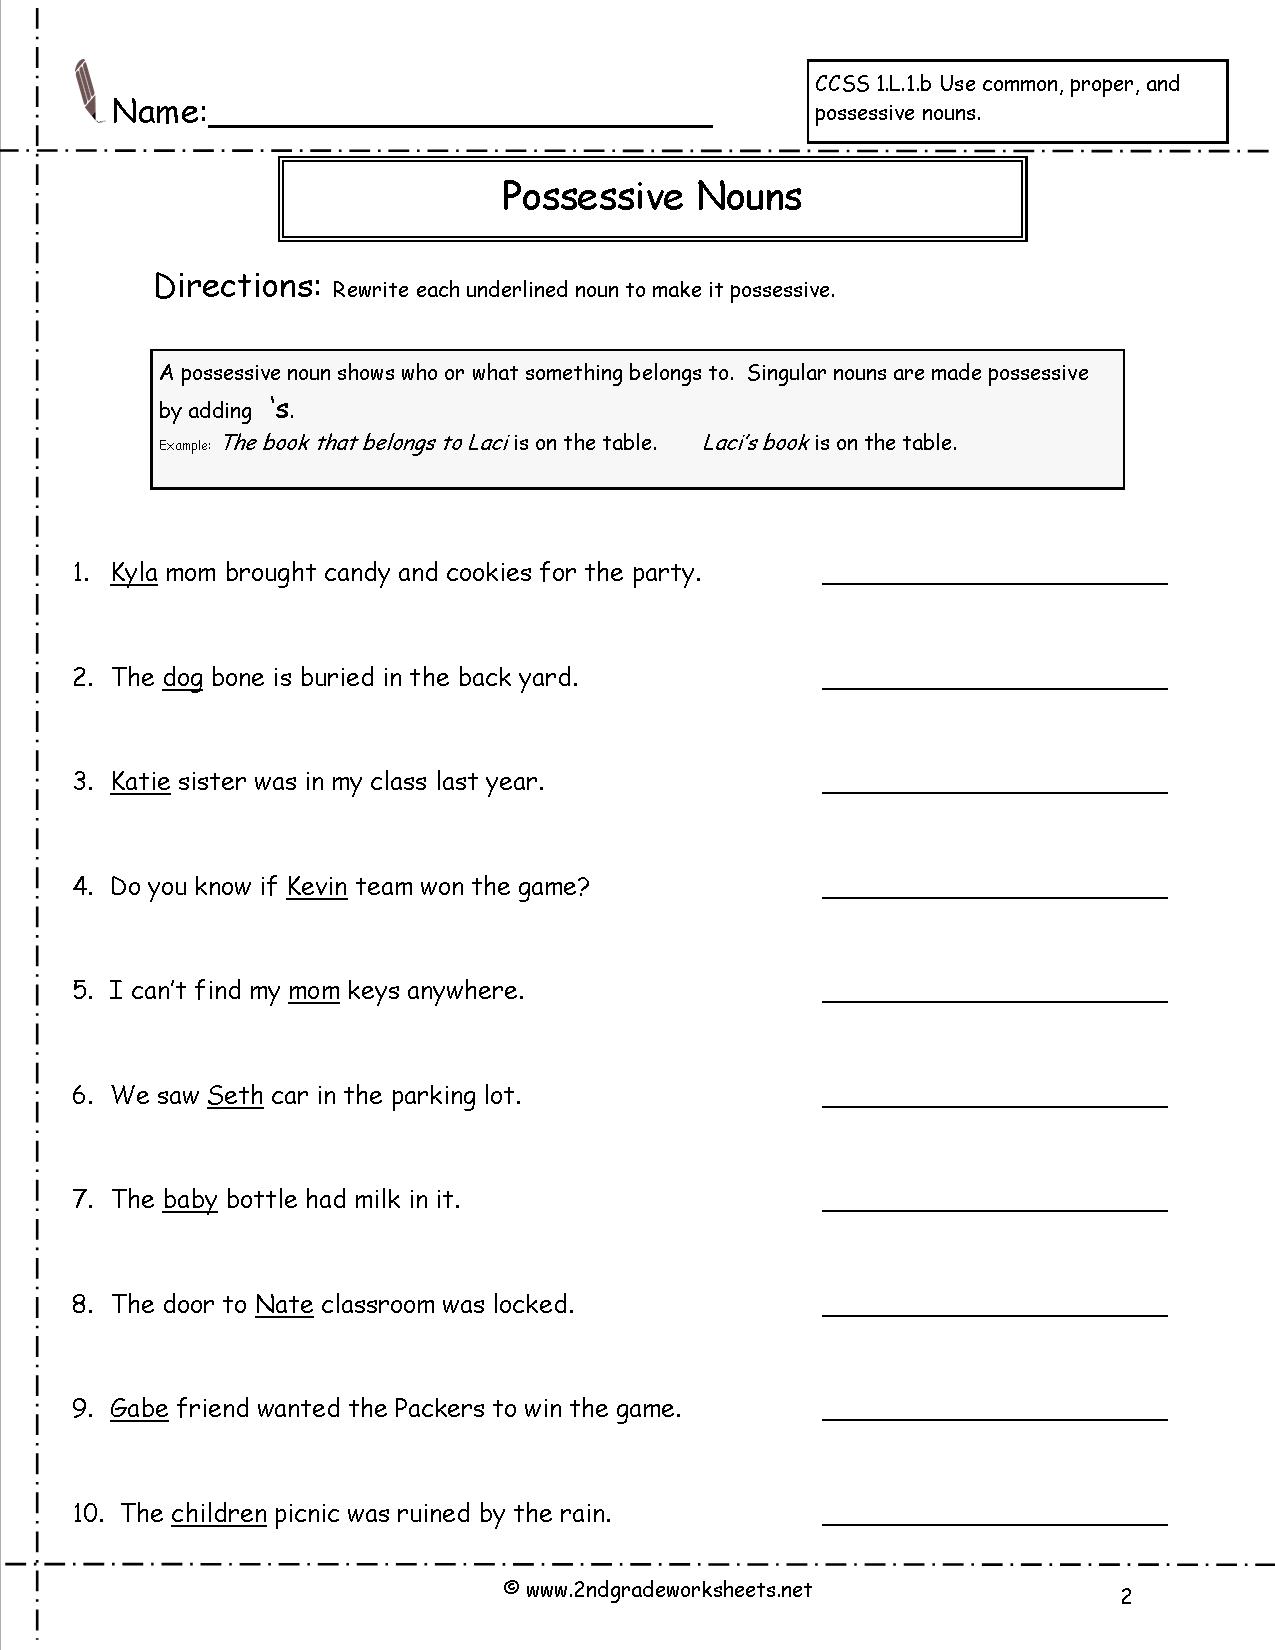 Possessive Nouns Worksheets Grade 1 Pdf